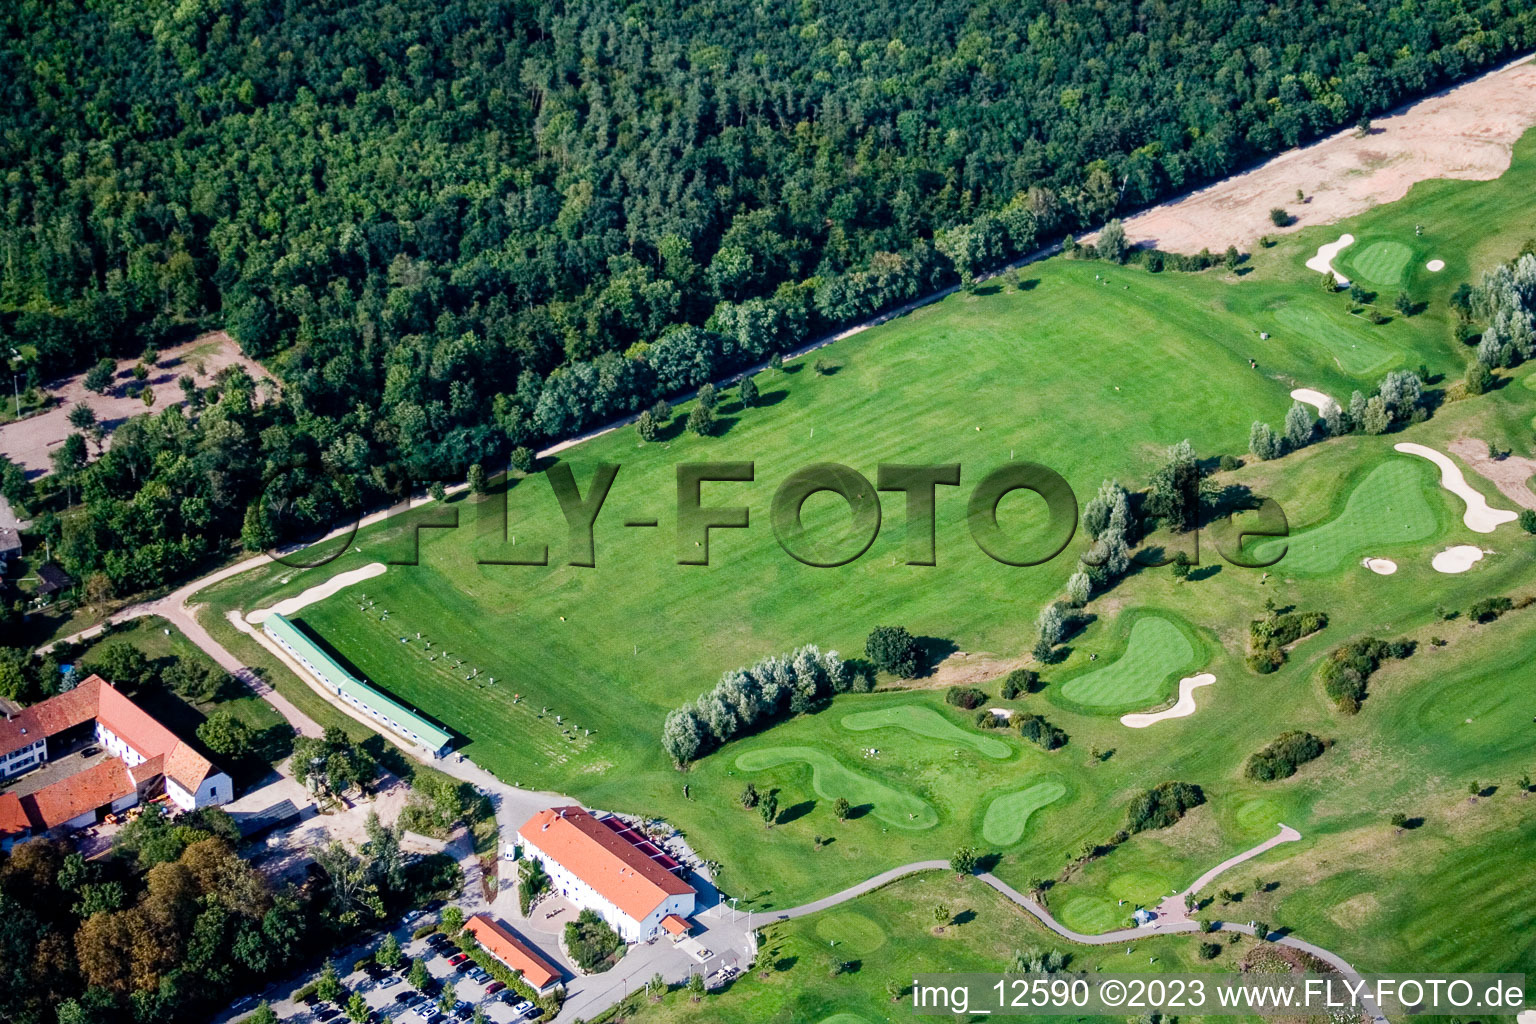 Golf Club Landgut Dreihof SÜW in Essingen in the state Rhineland-Palatinate, Germany from the plane